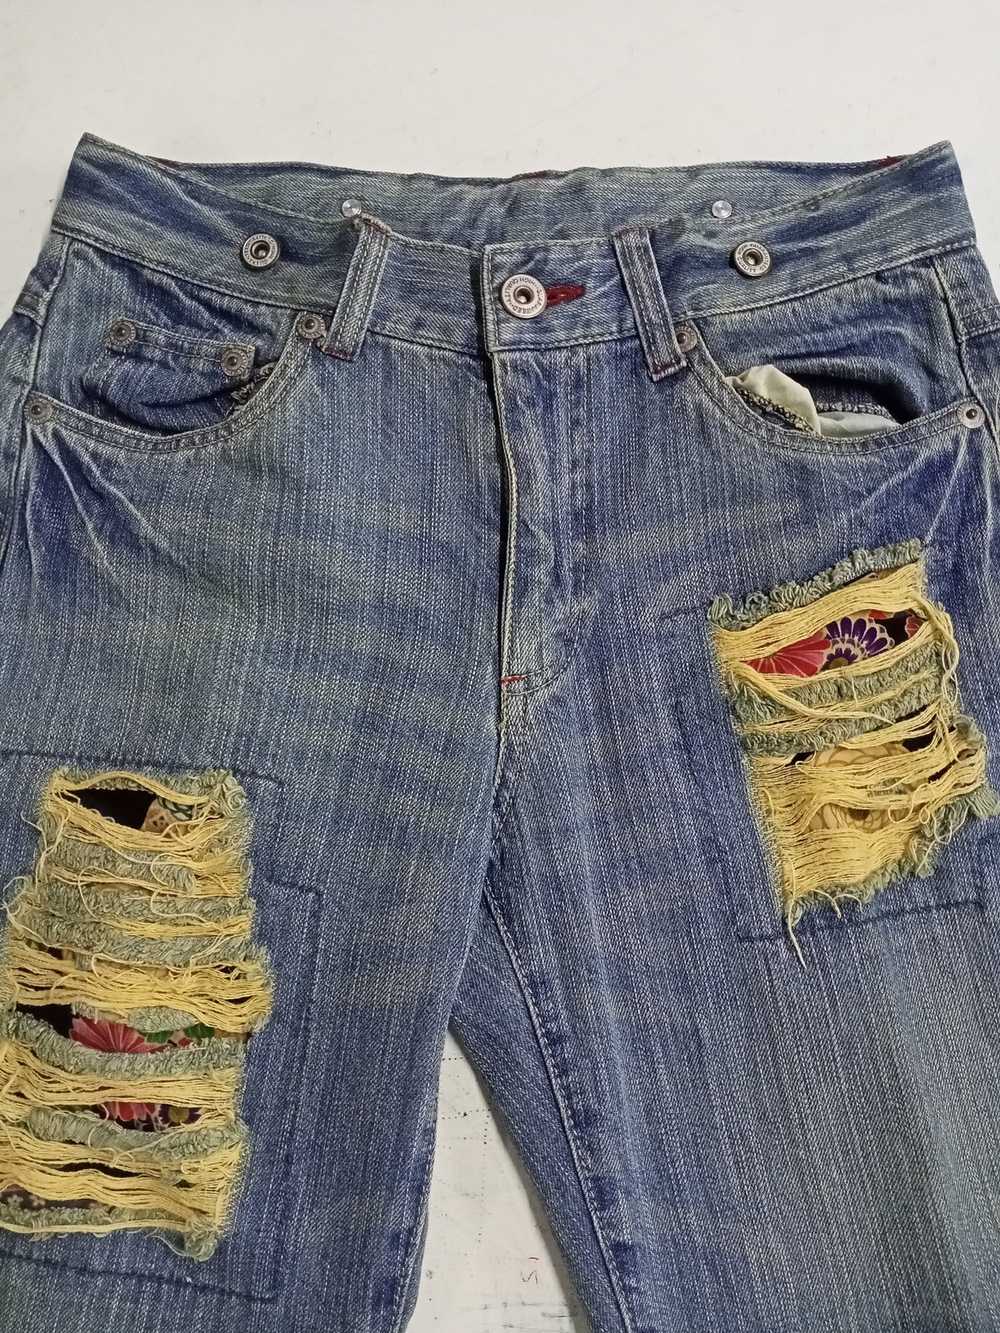 Distressed Denim Hig quality guaranteed jeans - image 1